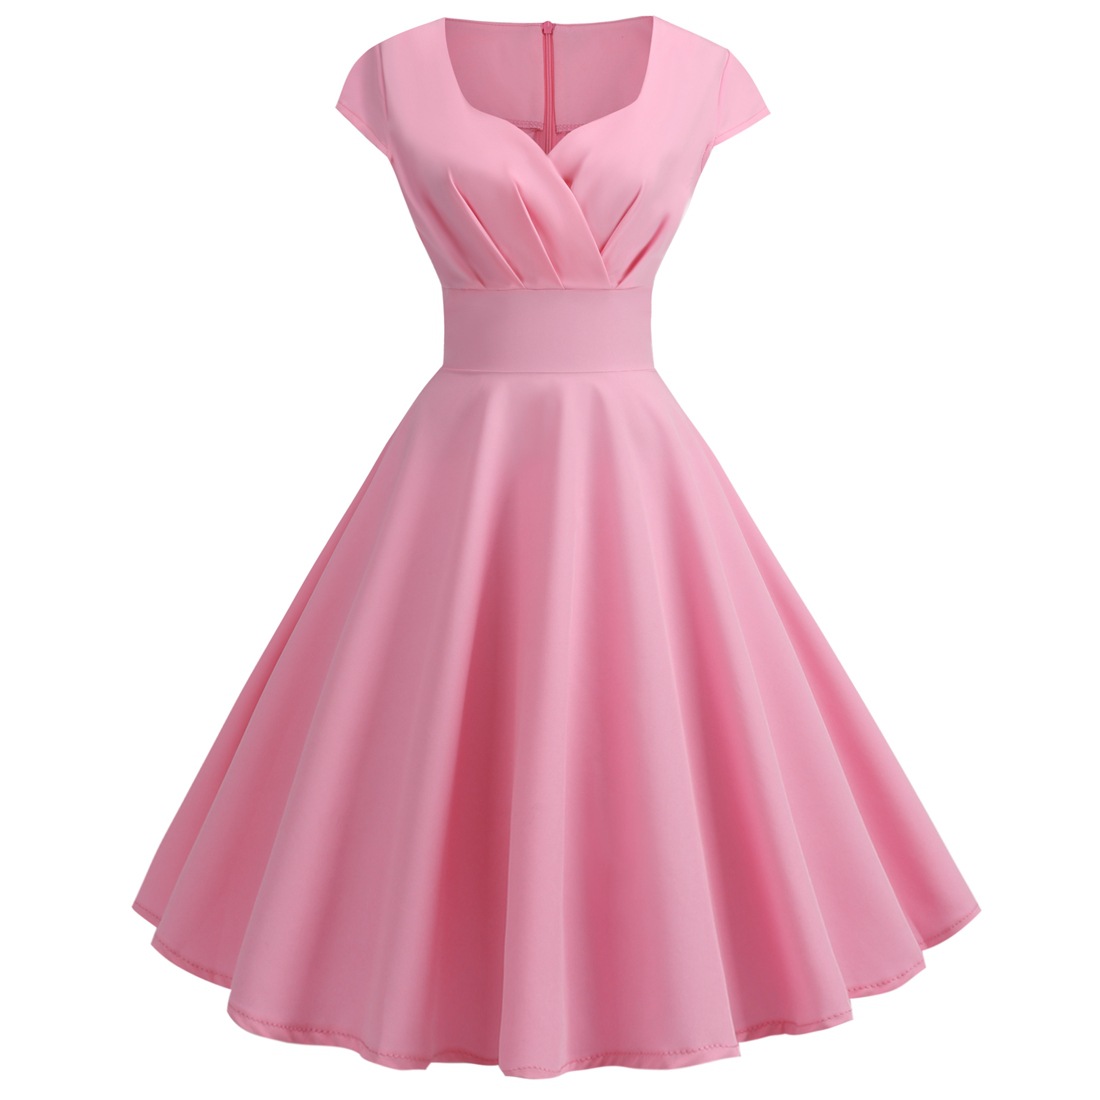 x亚马逊eBay热卖新款复古女装V领半袖收腰纯色大摆连衣裙一件起批